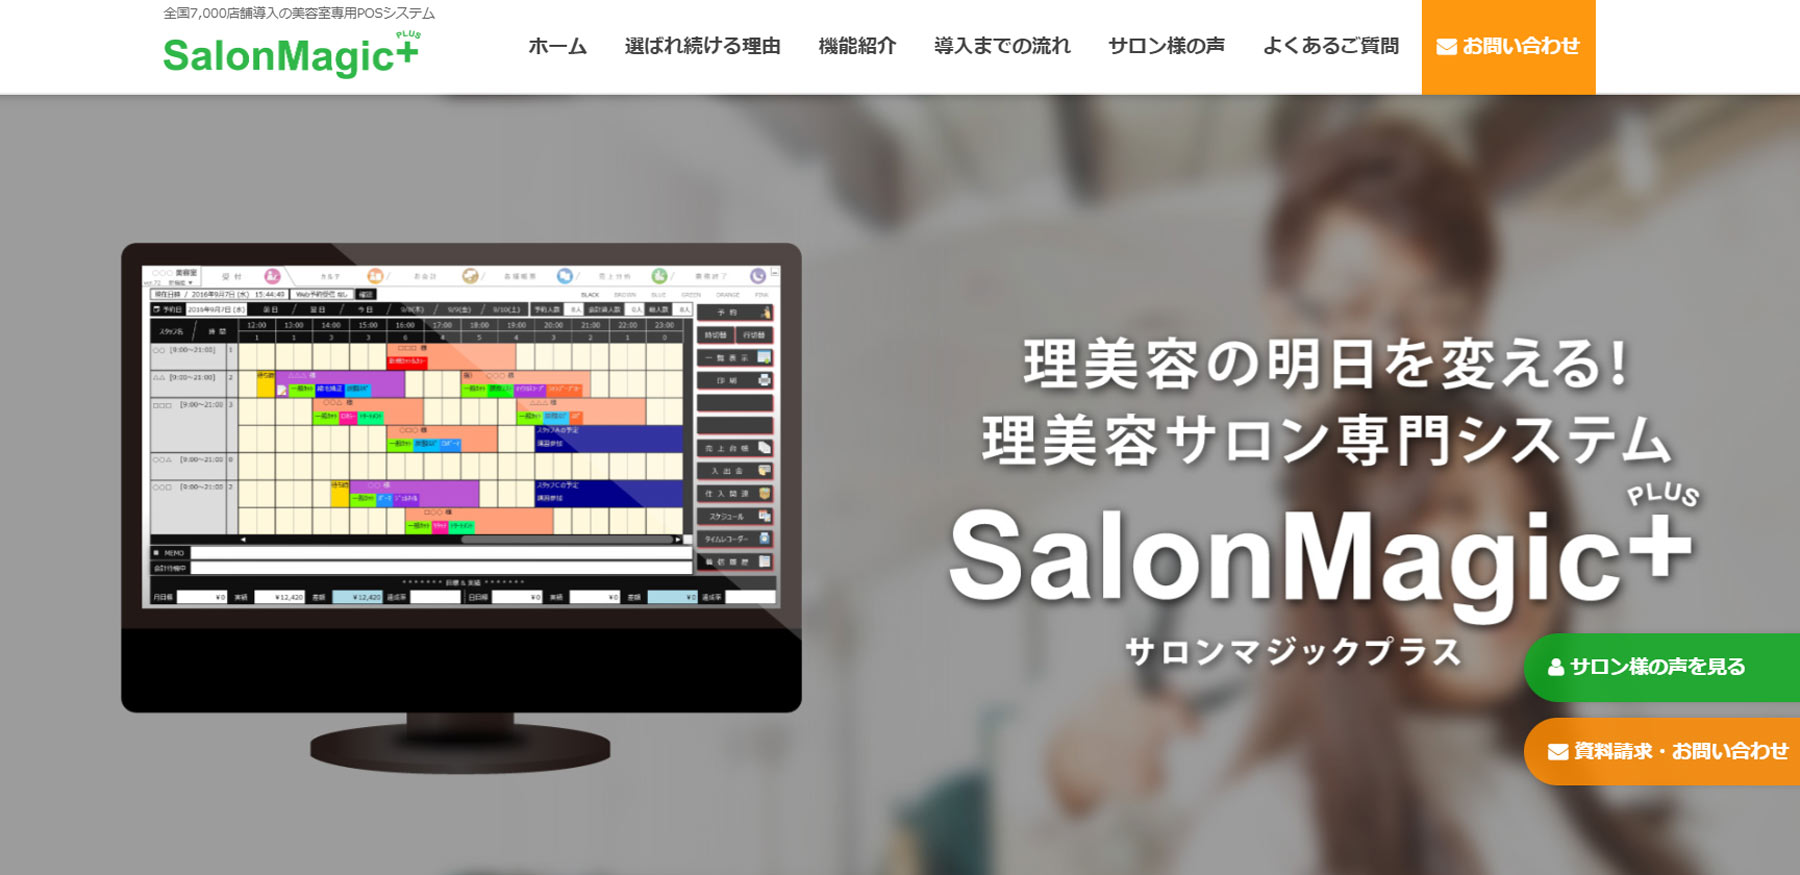 SalonMagic+公式Webサイト